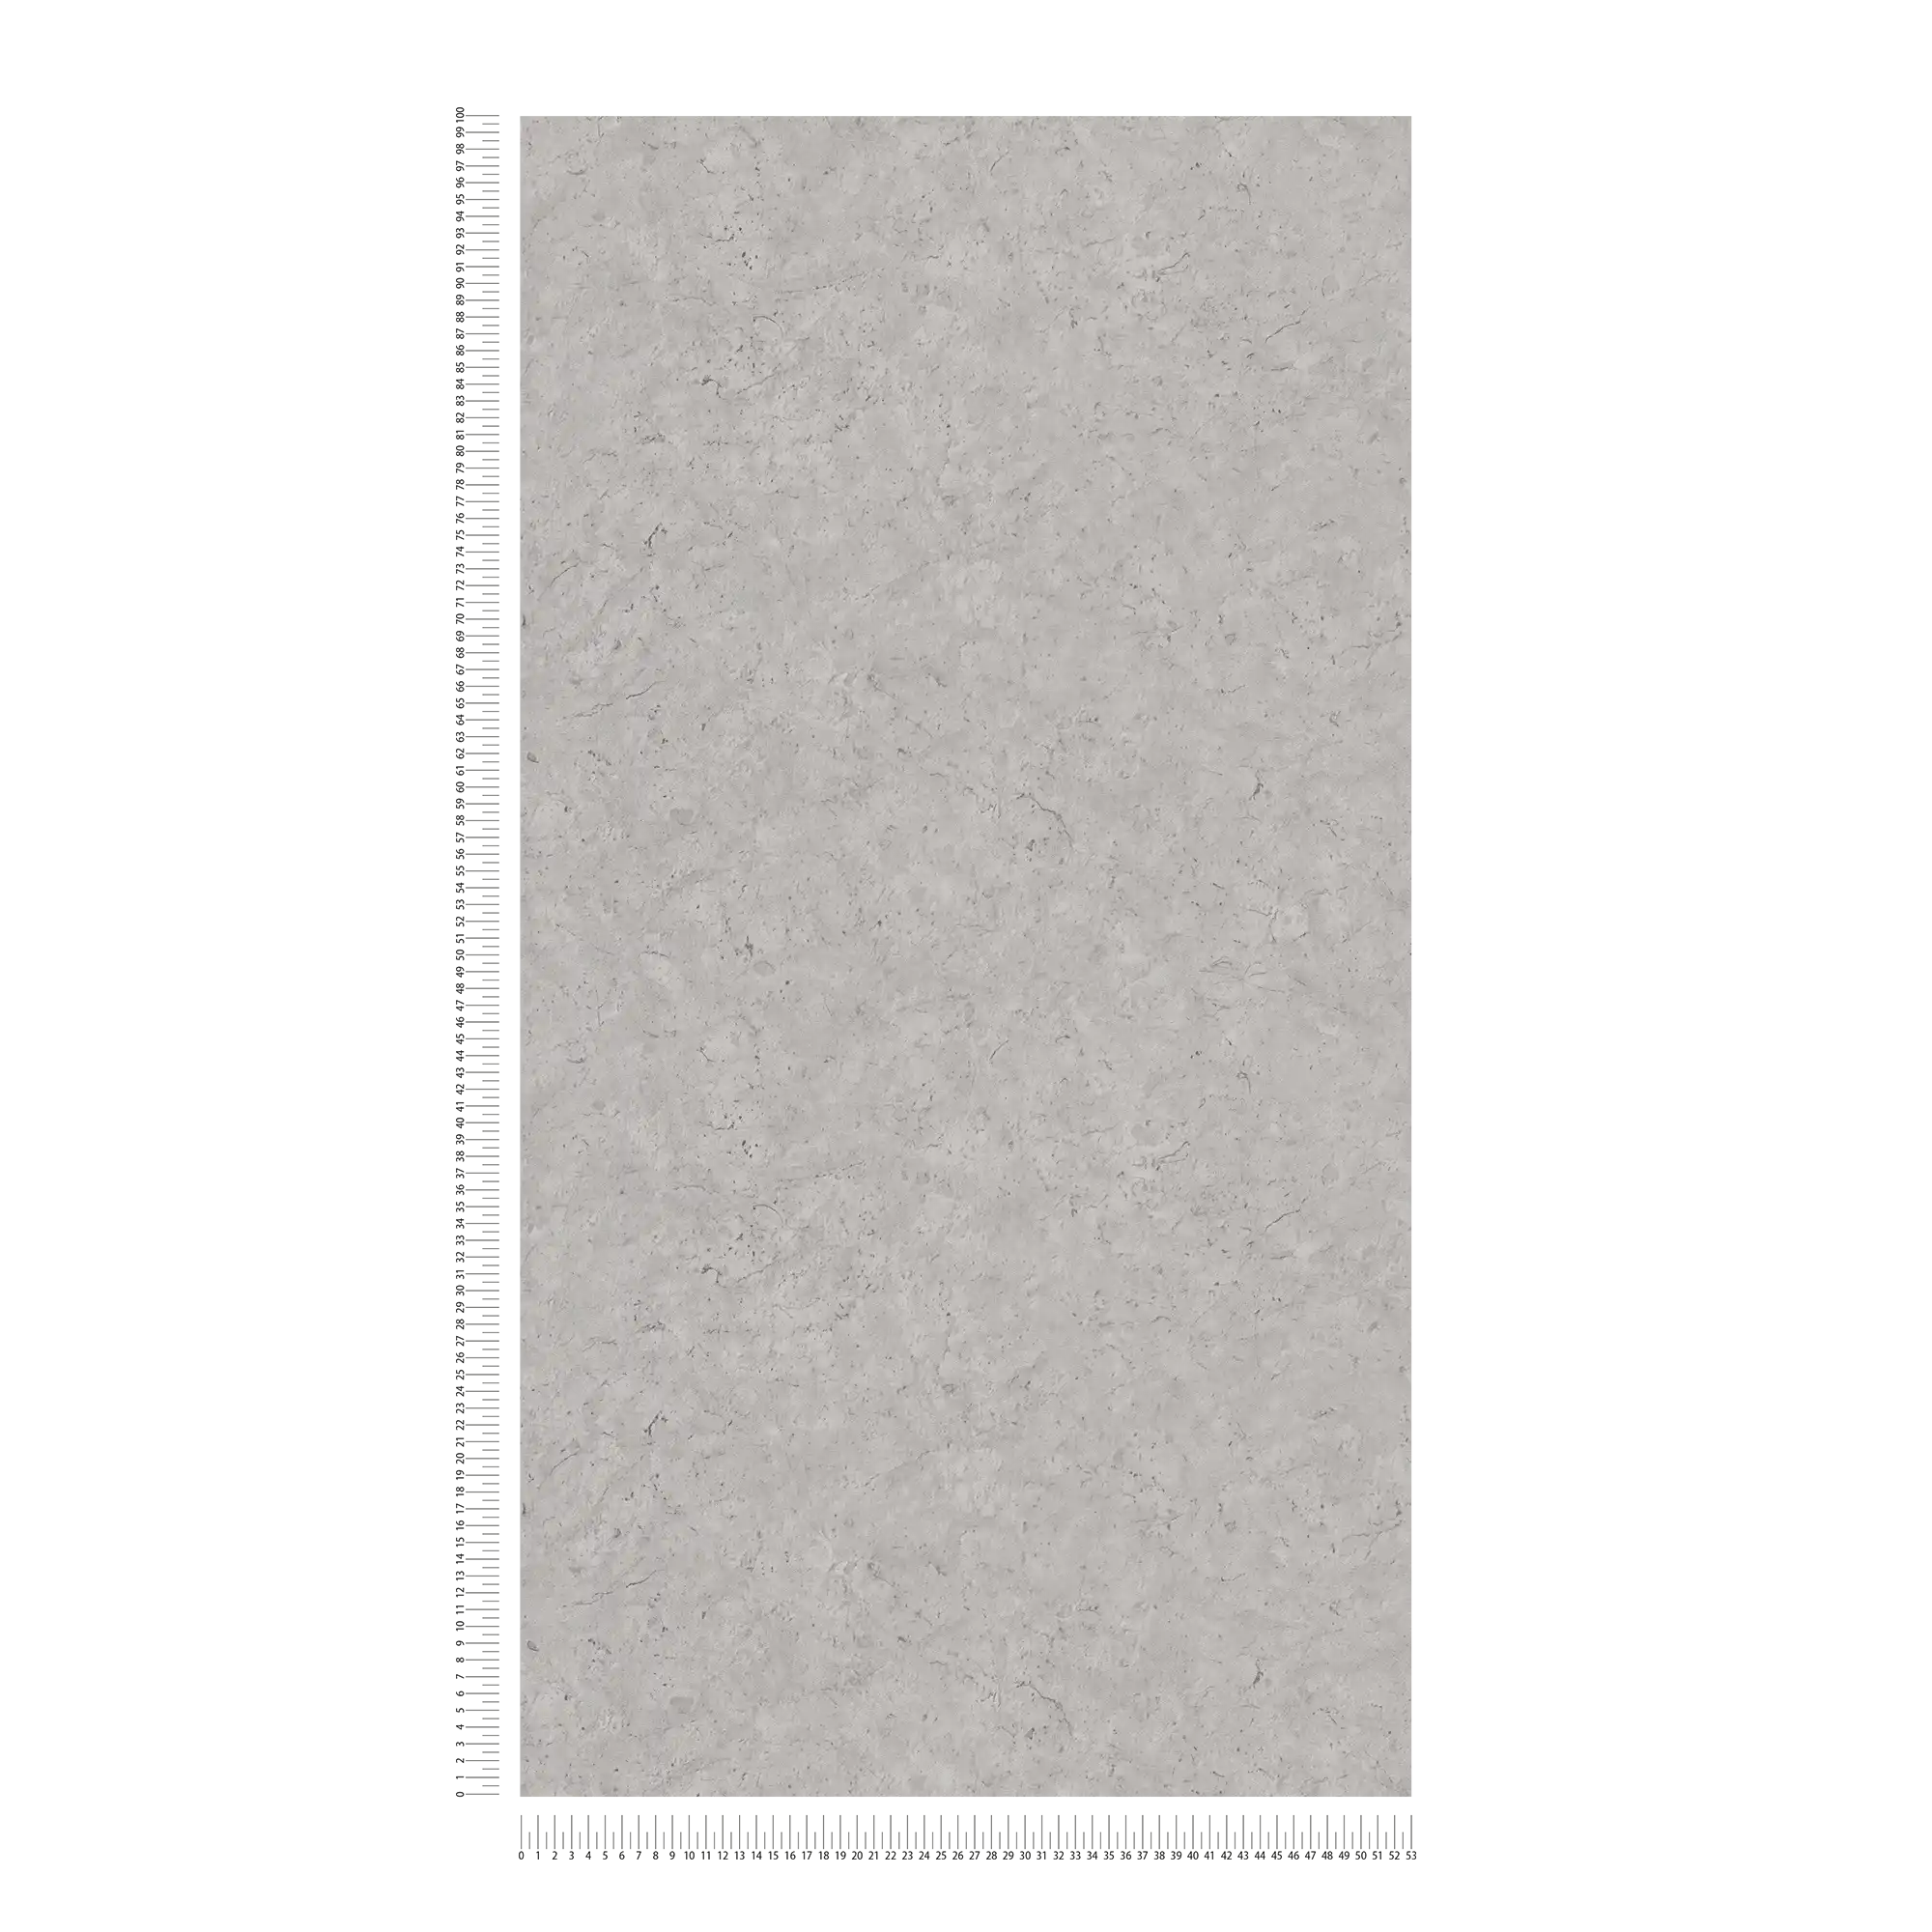             Betonoptik Tapete mit dezentem Muster – Grau
        